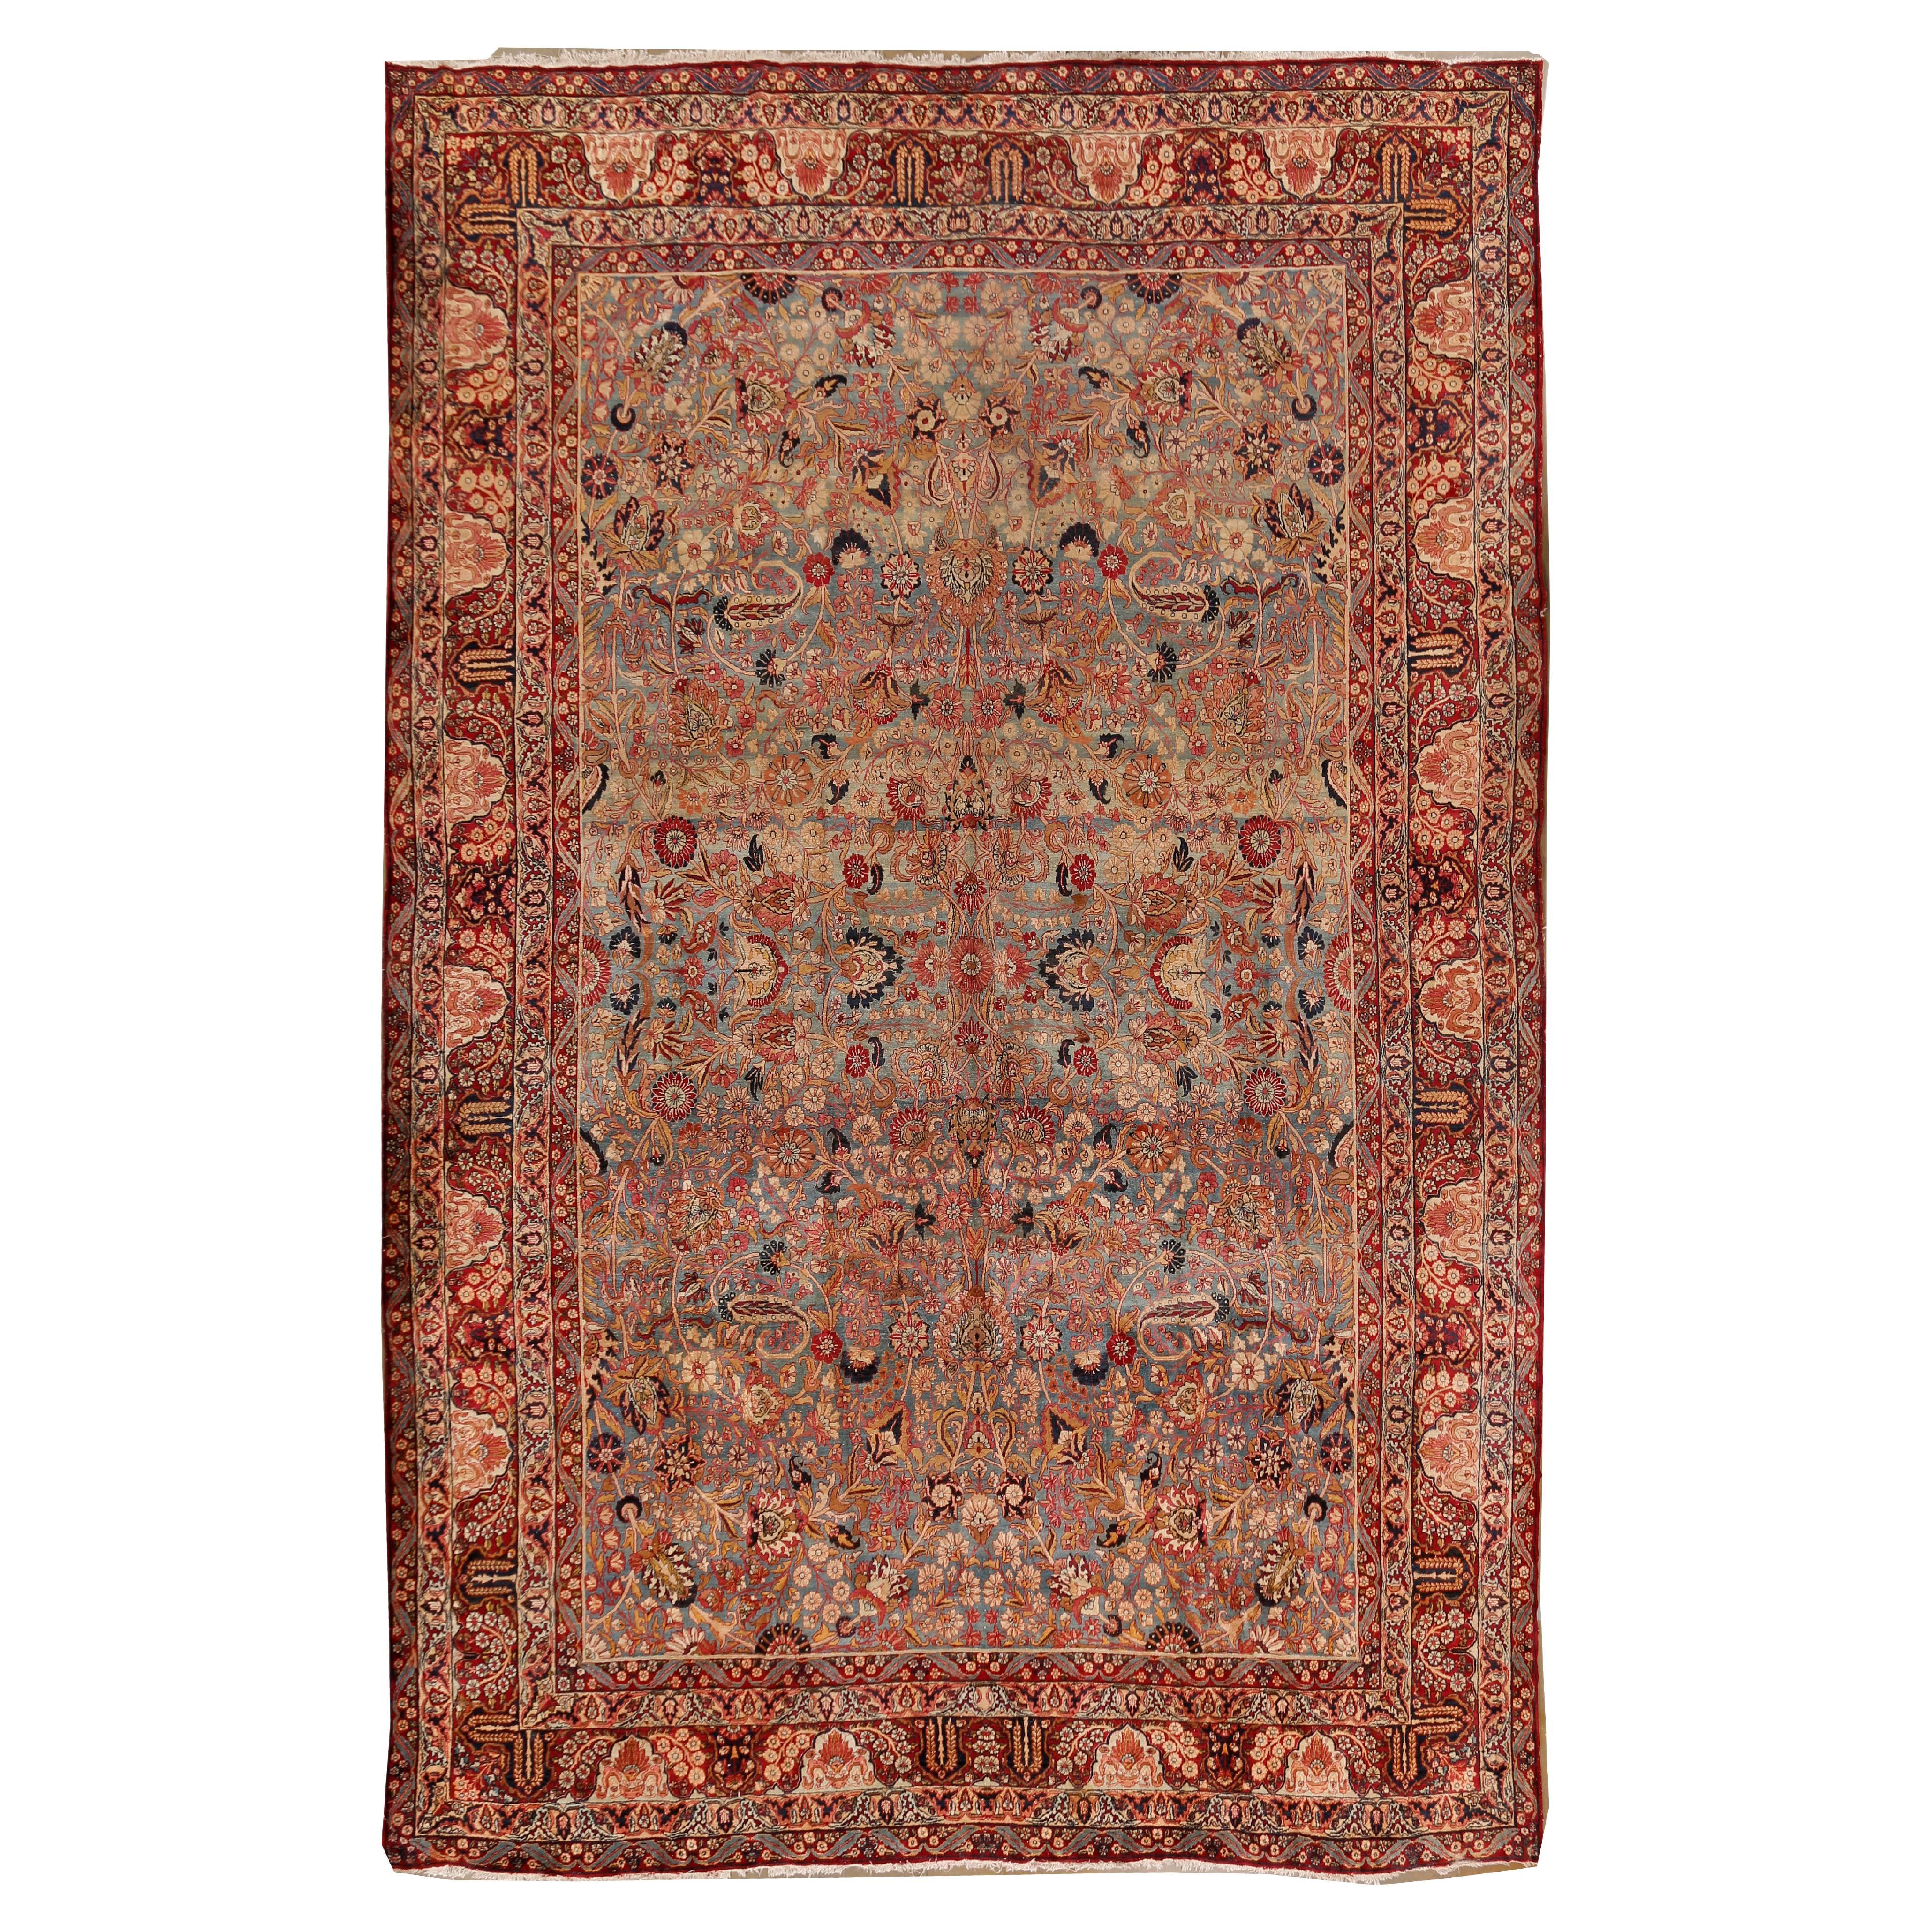 Antique Persian Kirman Rug, Carpet  11' x 16'8